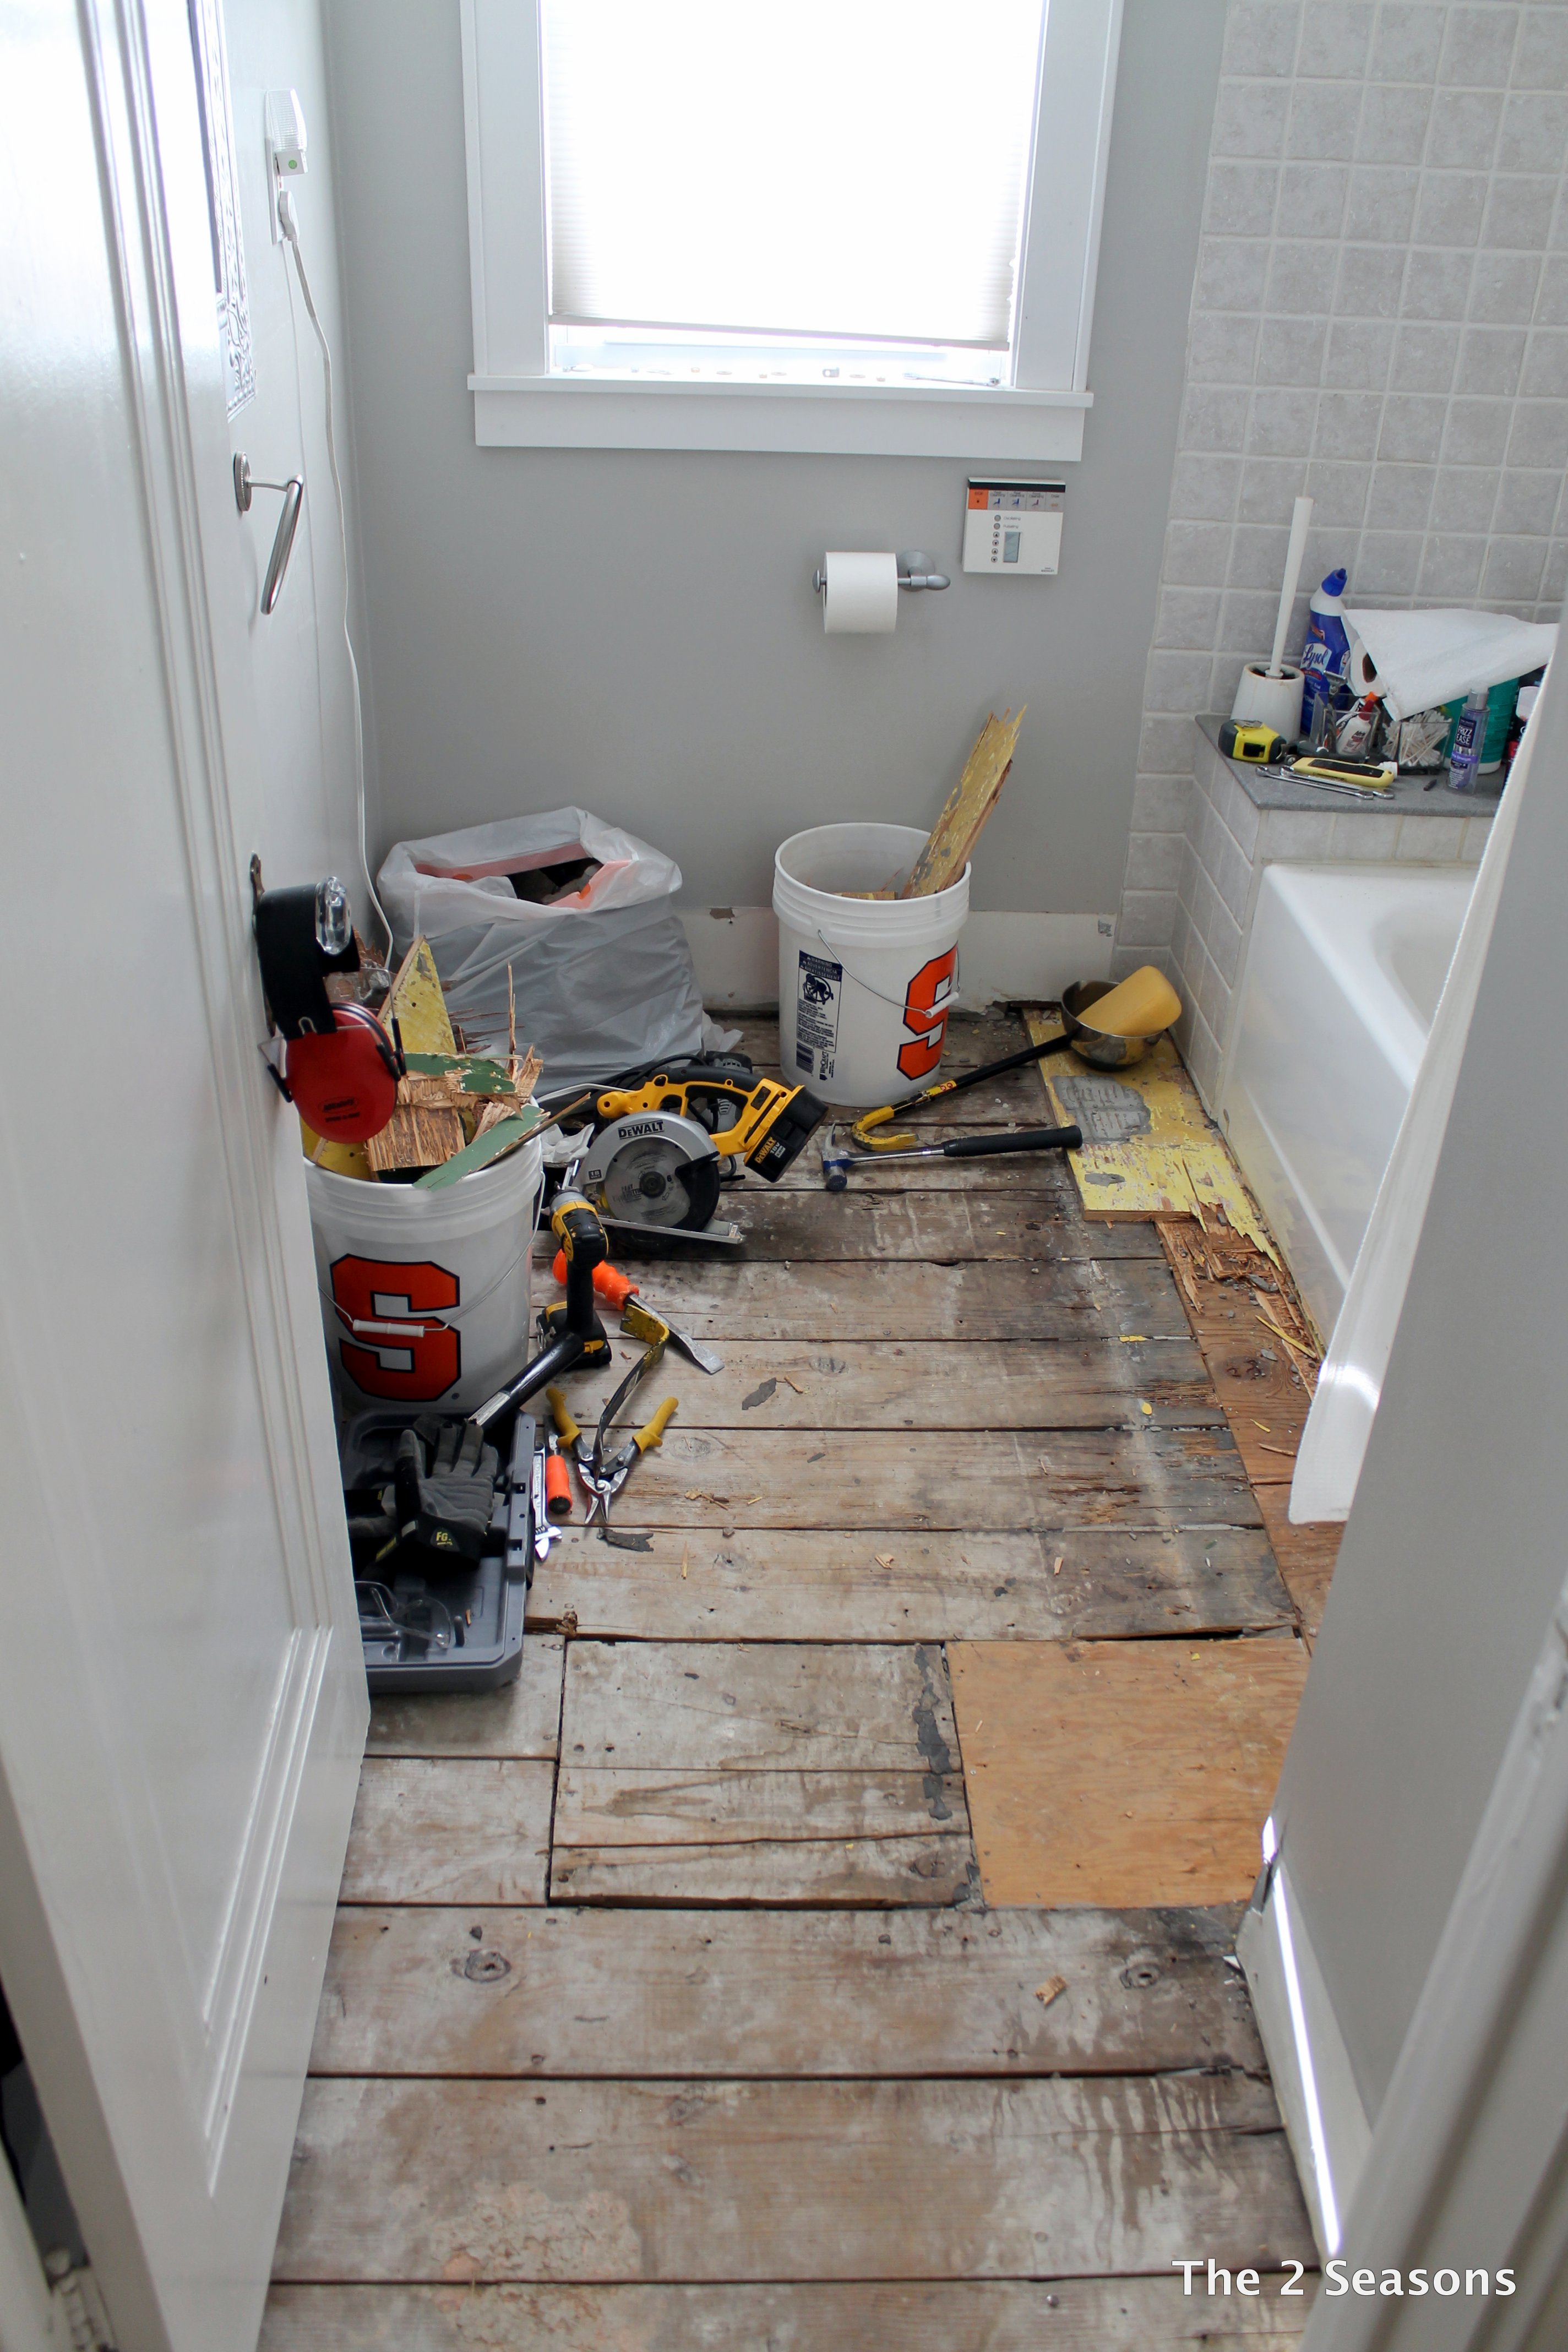 IMG 8418 - The Bathroom Floor Continues